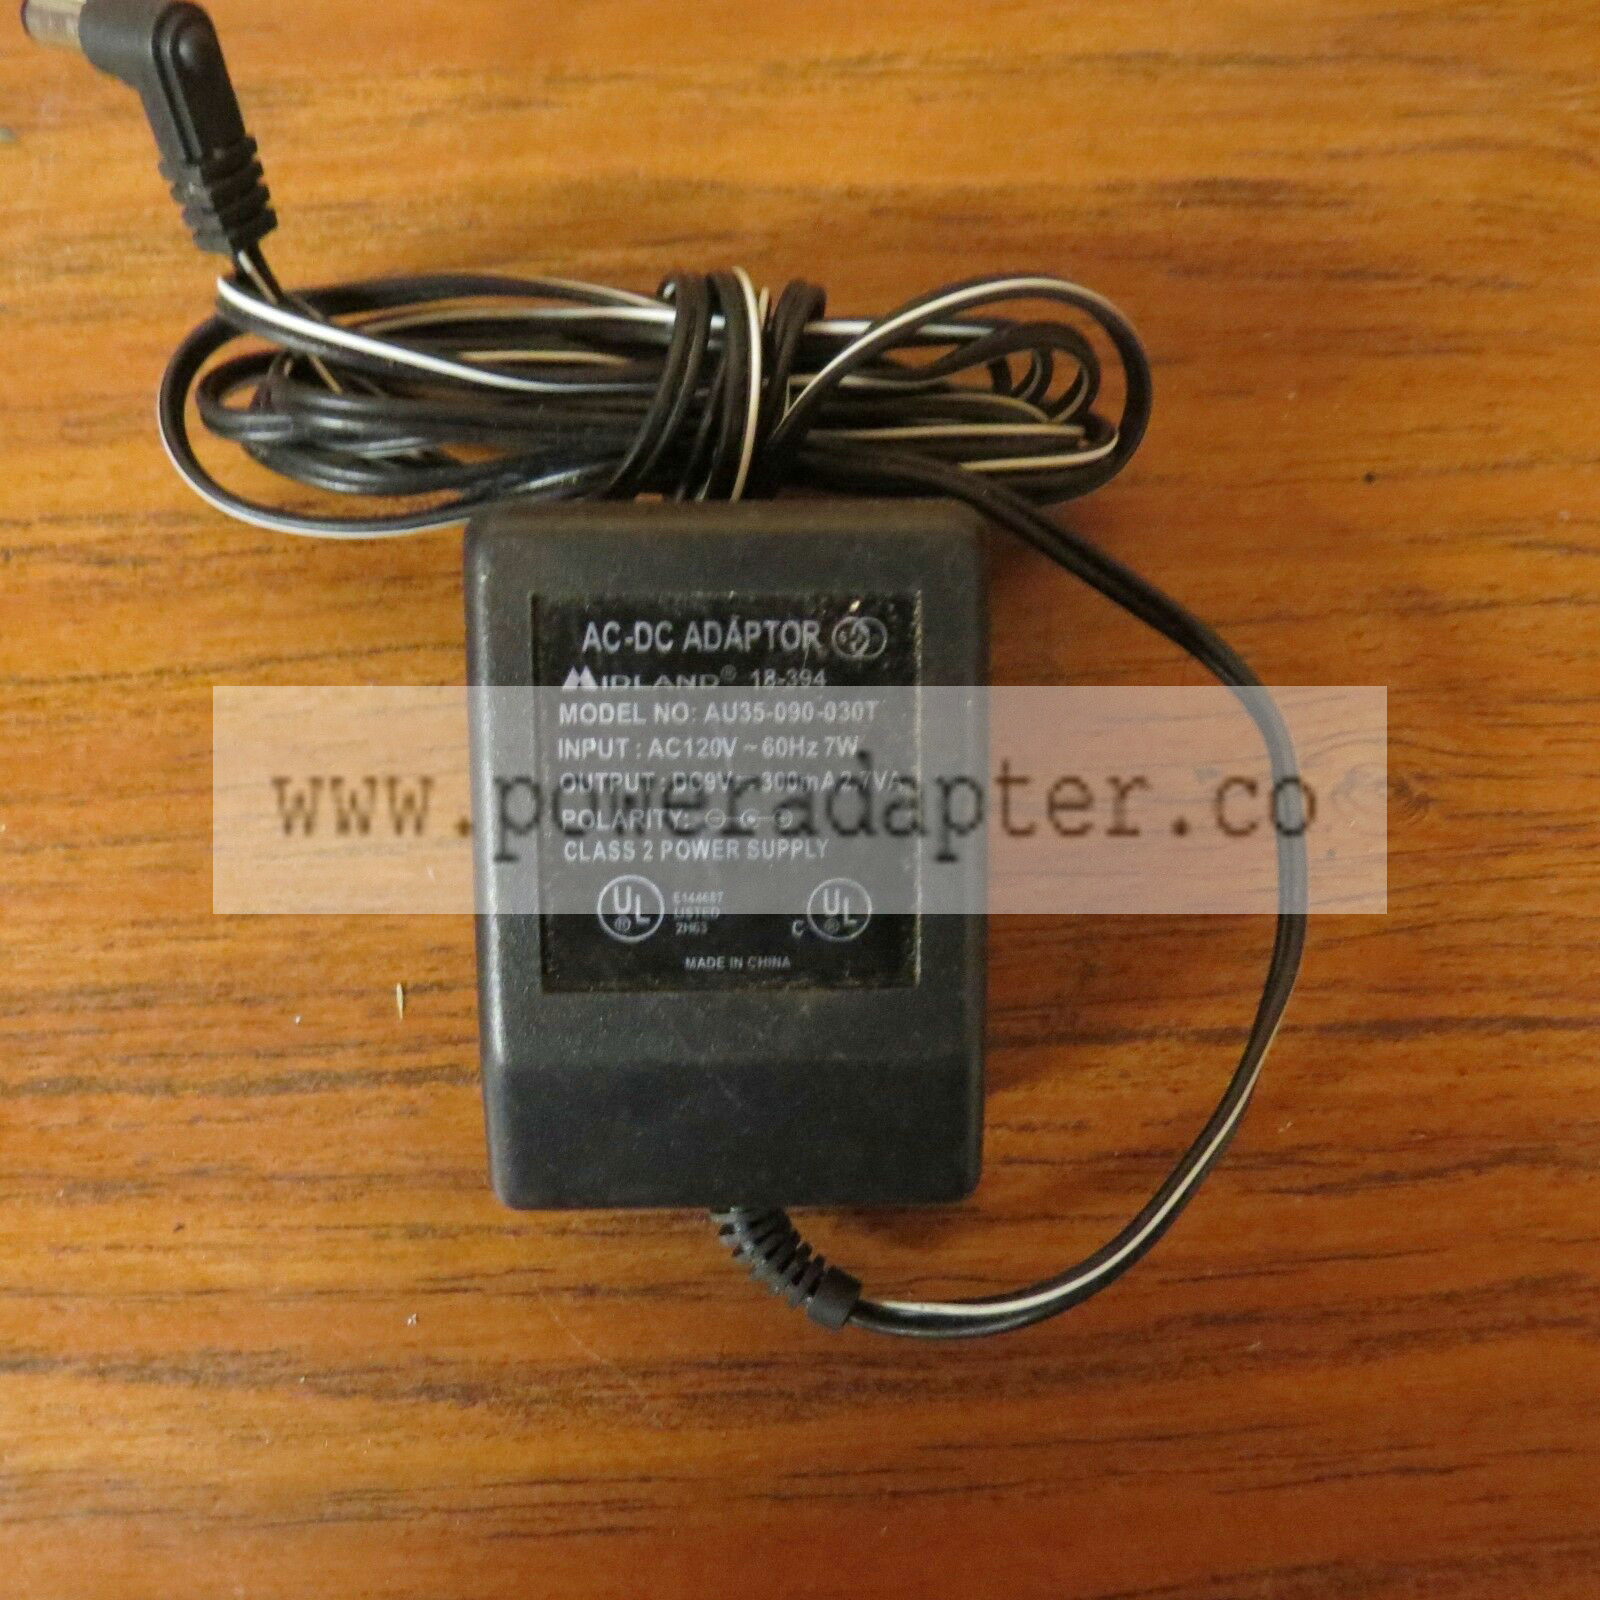 Midland LXADP AC Adapter Power Supp 9v 300ma Midland LXADP AC Adapter Power Supp Type: AC Adapter Power Supply Model: